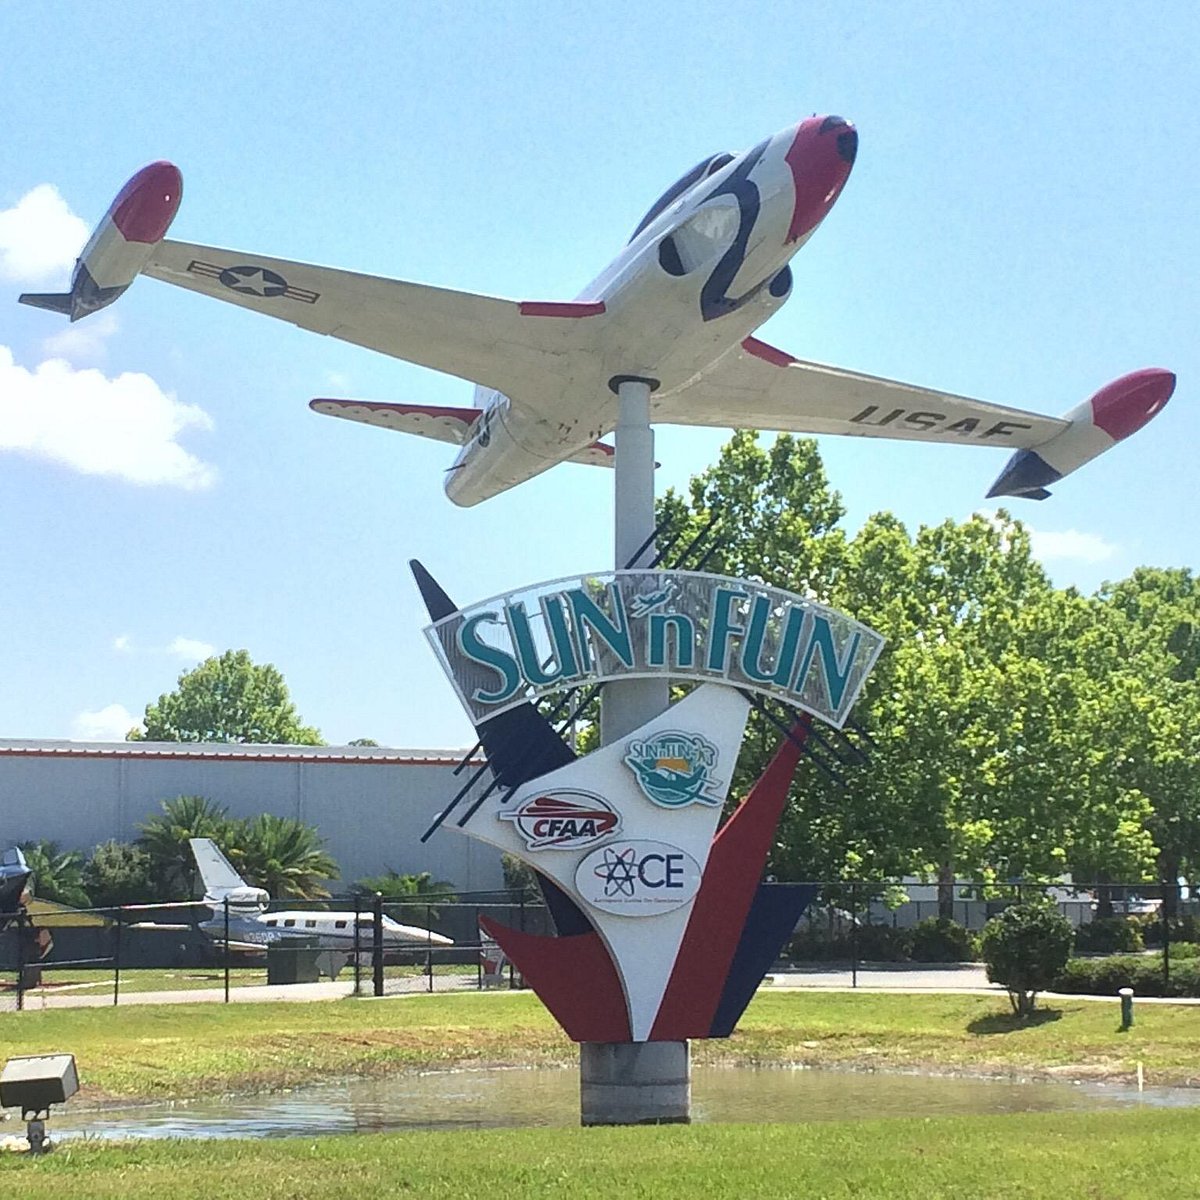 Aerospace Discovery at the Florida Air Museum at Sun 'n Fun (Lakeland